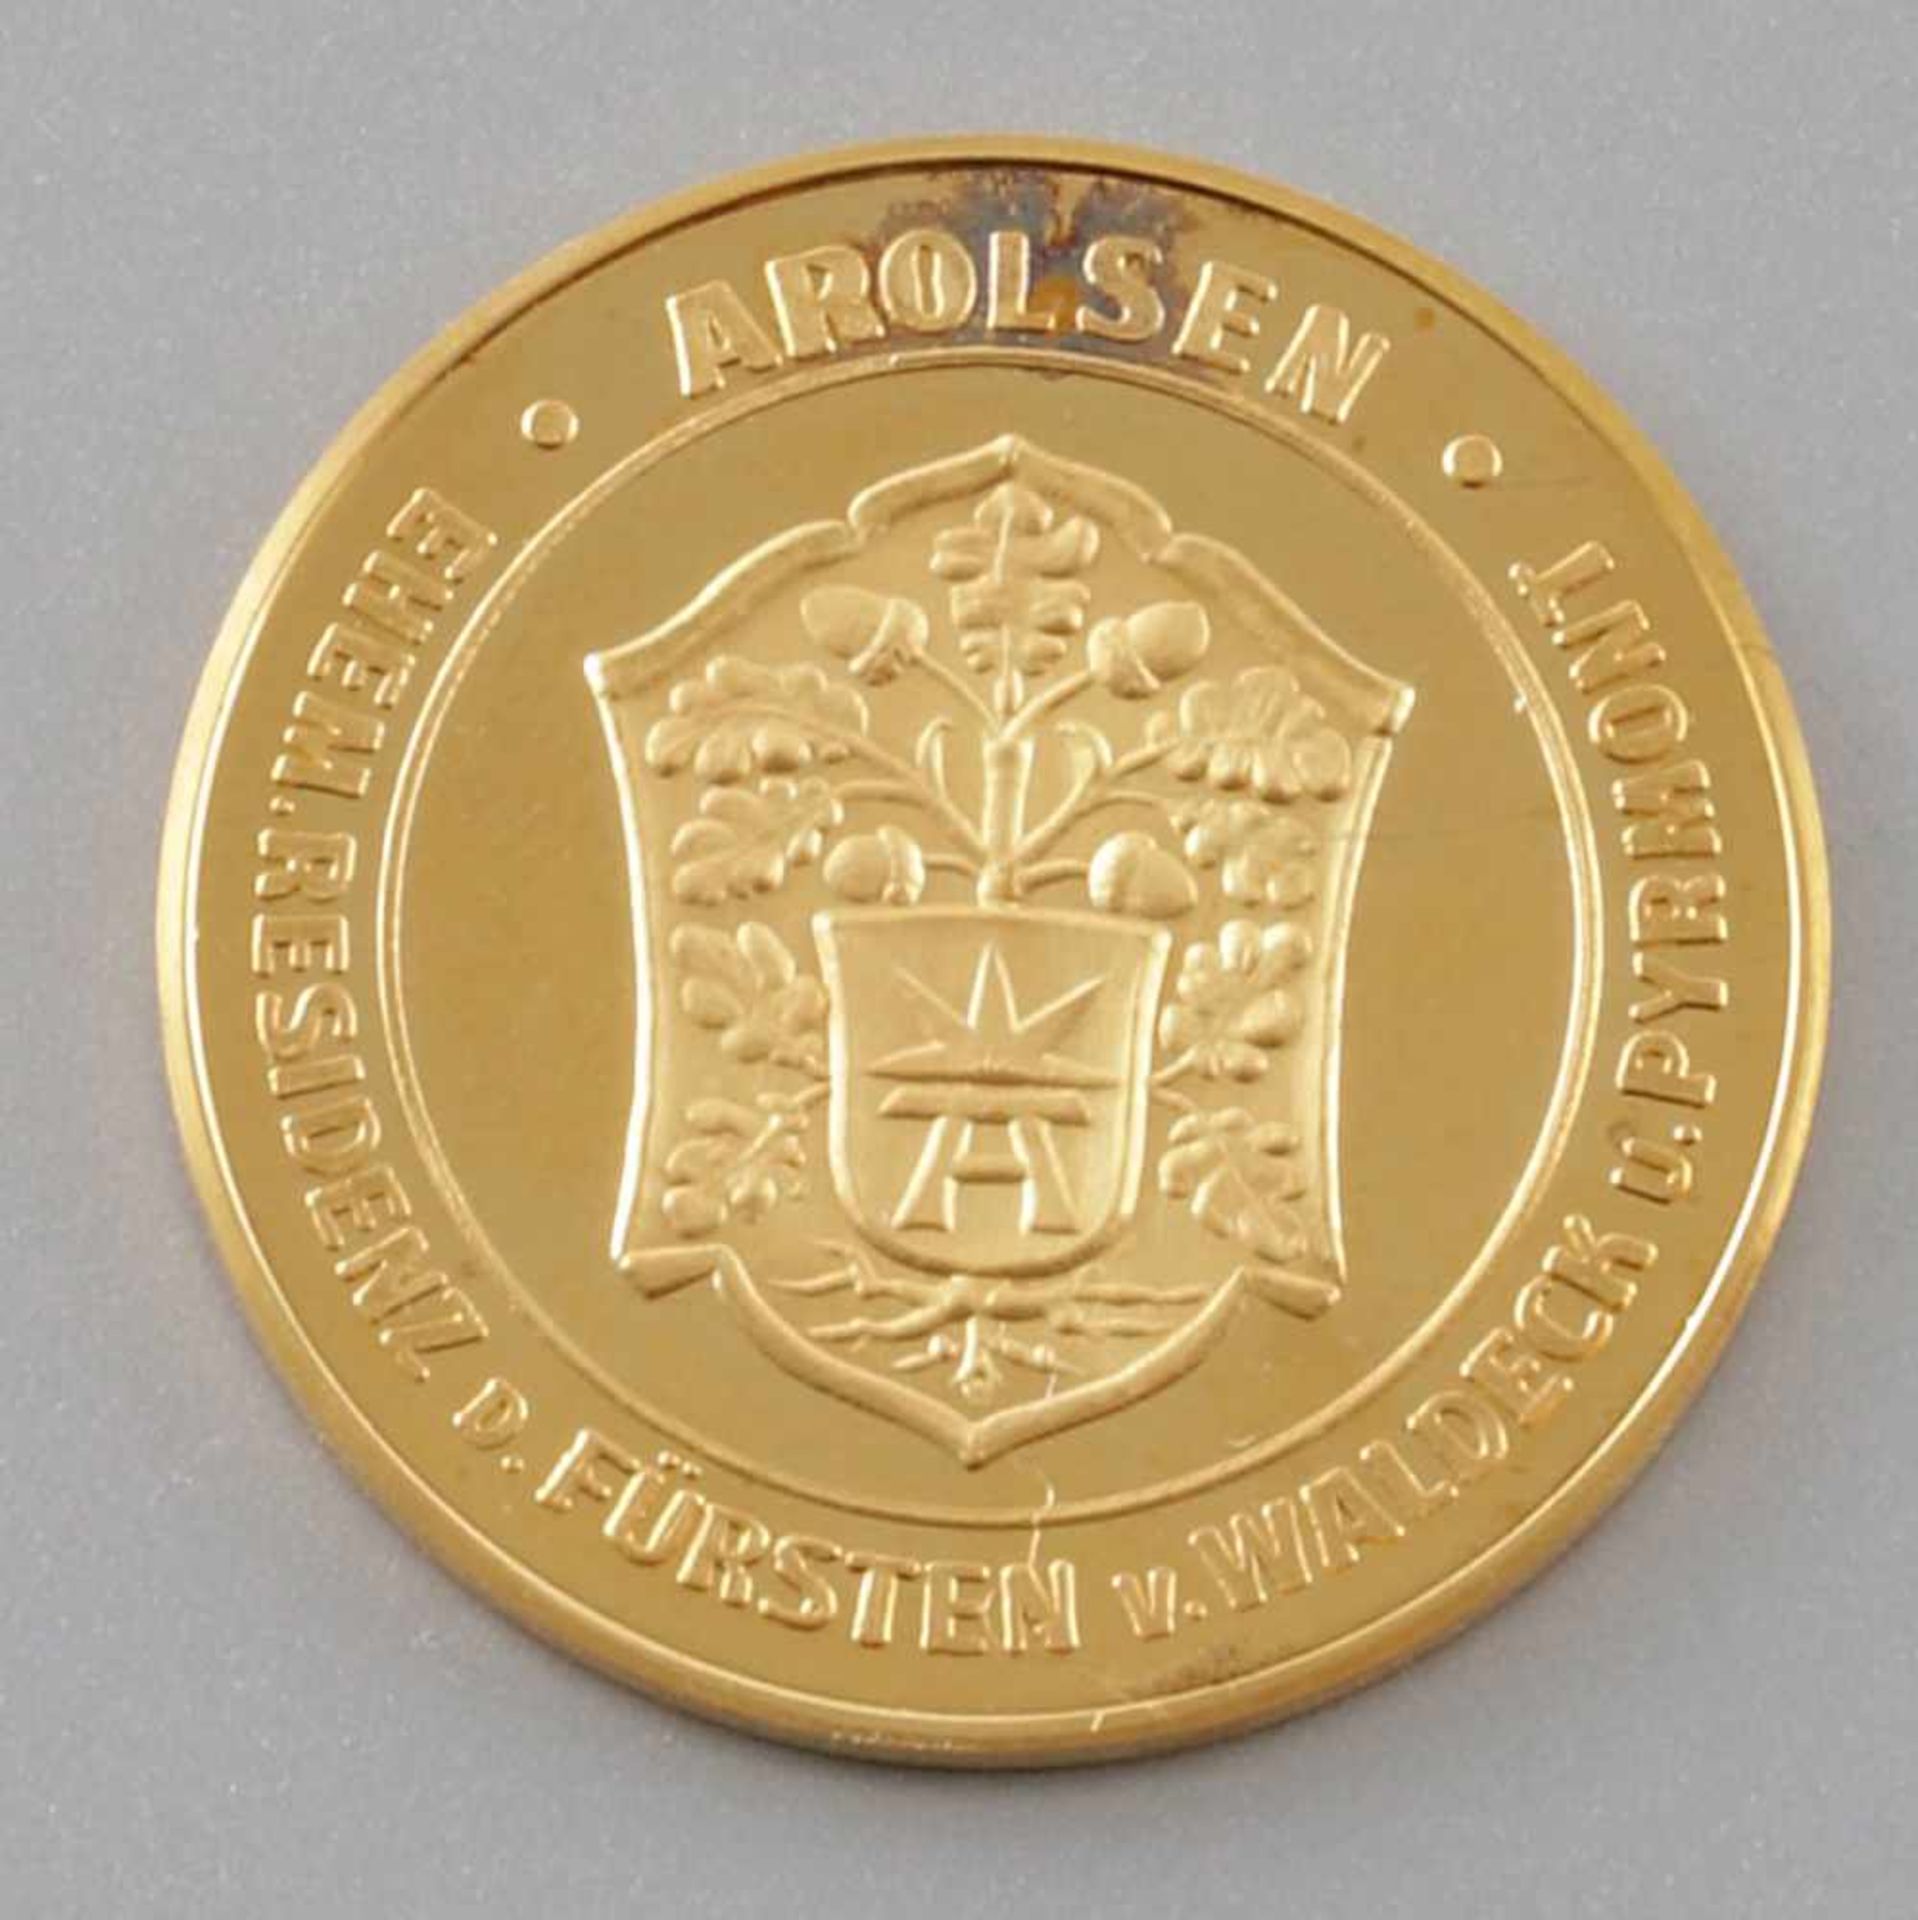 GoldmedailleDeutschland, Mitte 20. Jahrhundert. 986er GG. D. 26 mm. Gew. 8,97 g. SS. Vs. - Image 2 of 2